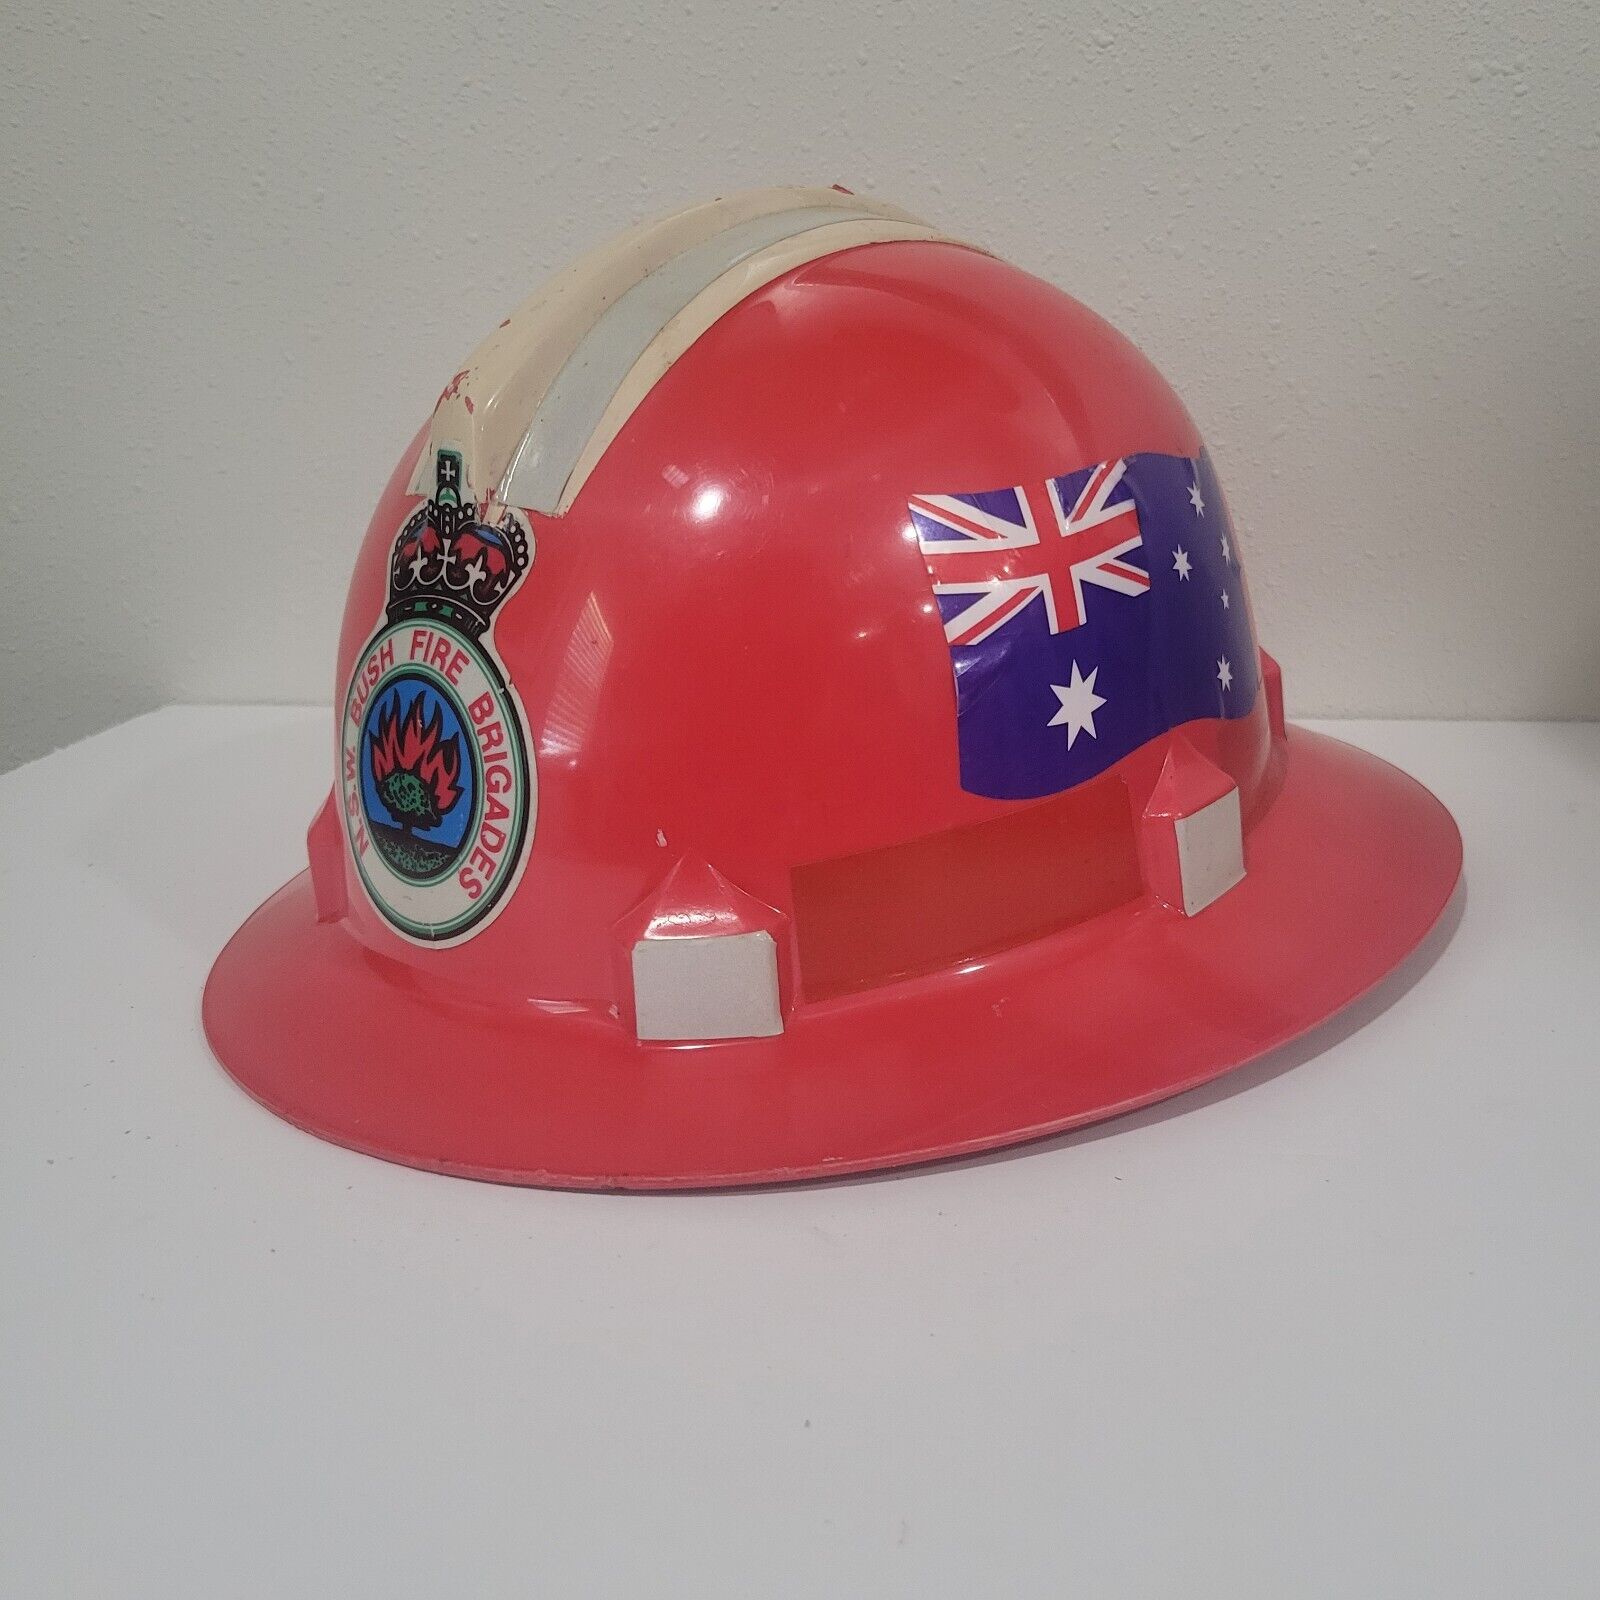 New South Wales Bush Fire Brigade Helmet Volunteer Firefighter Australia